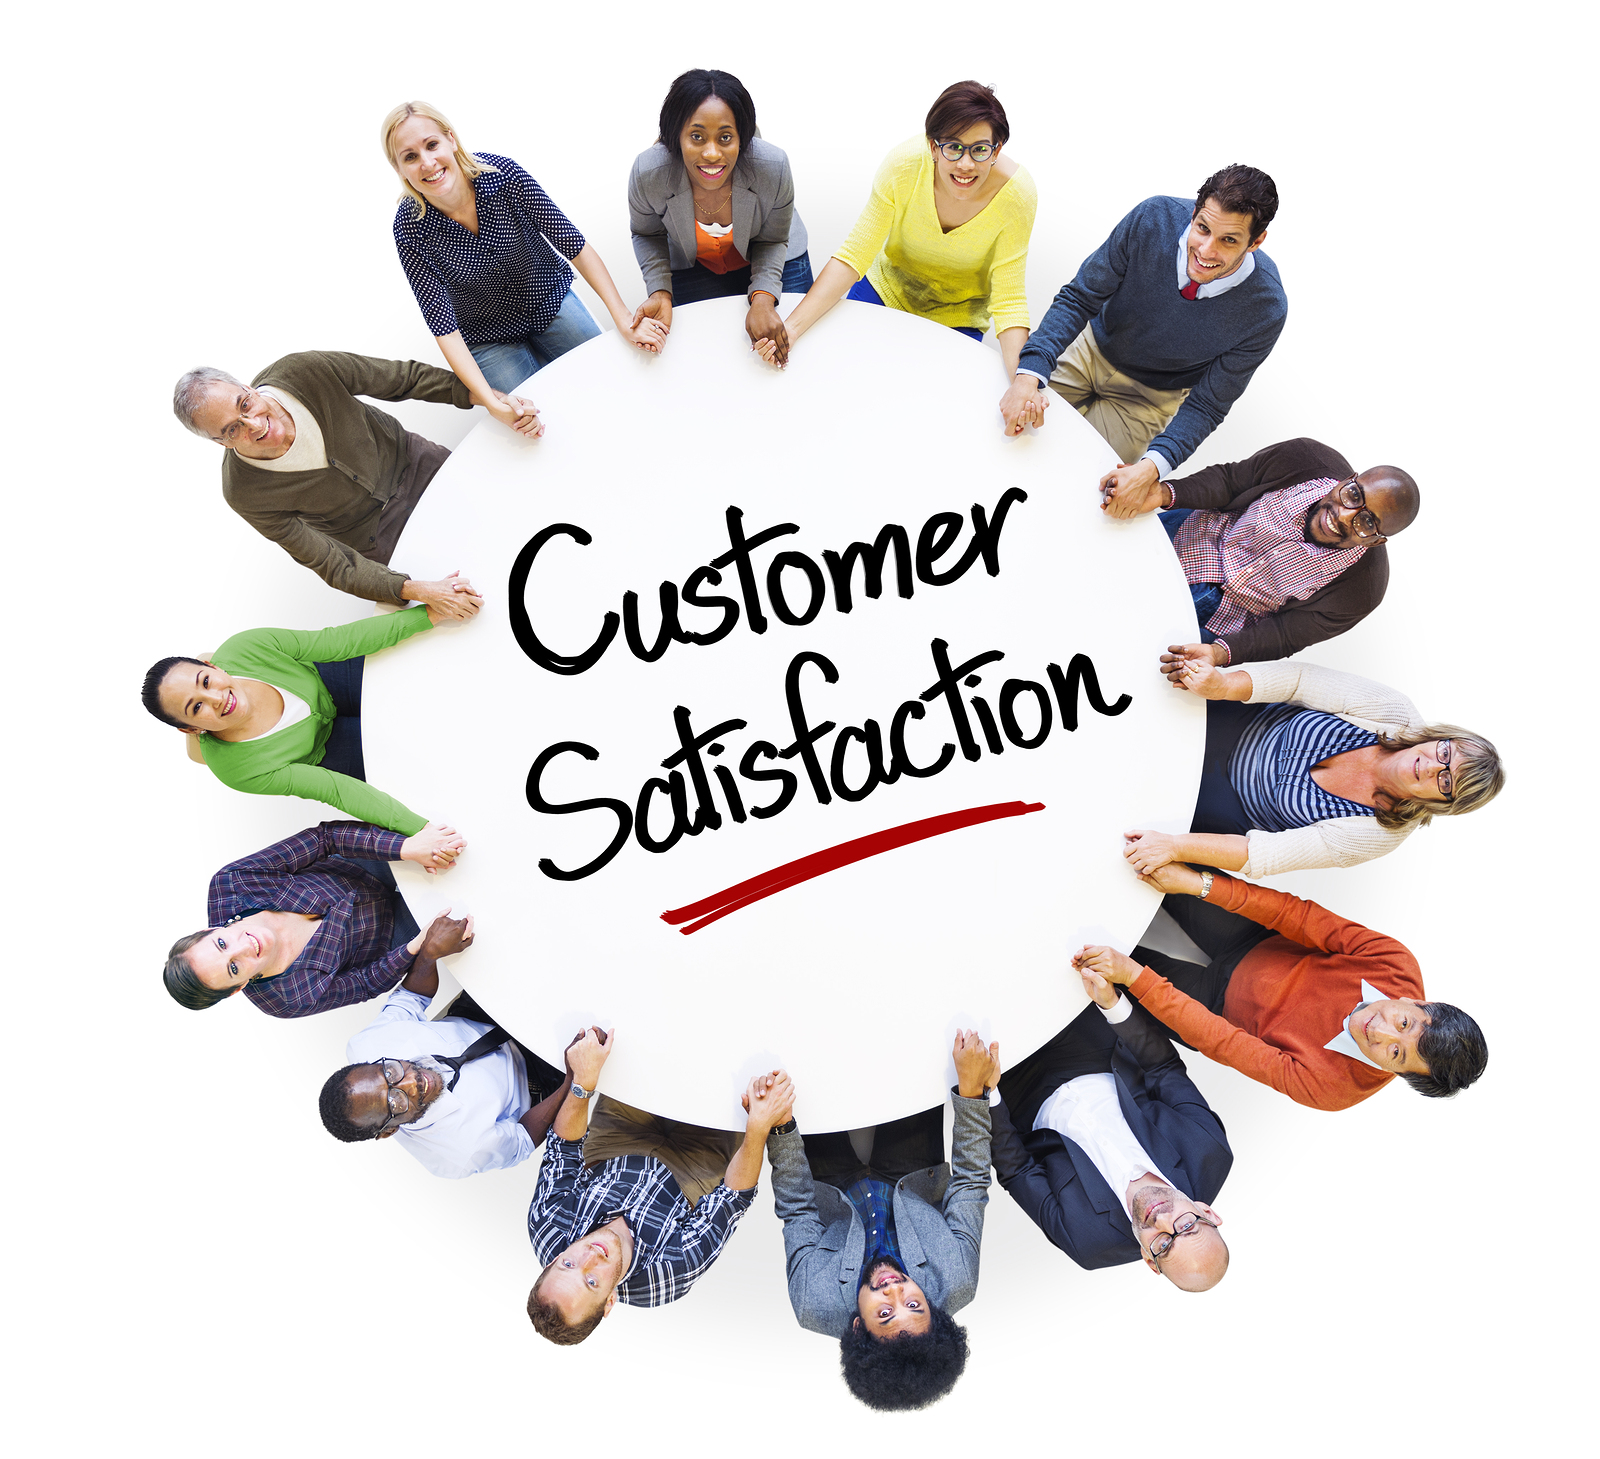 4 Strategic Ways to Ensure Customer Satisfaction Online